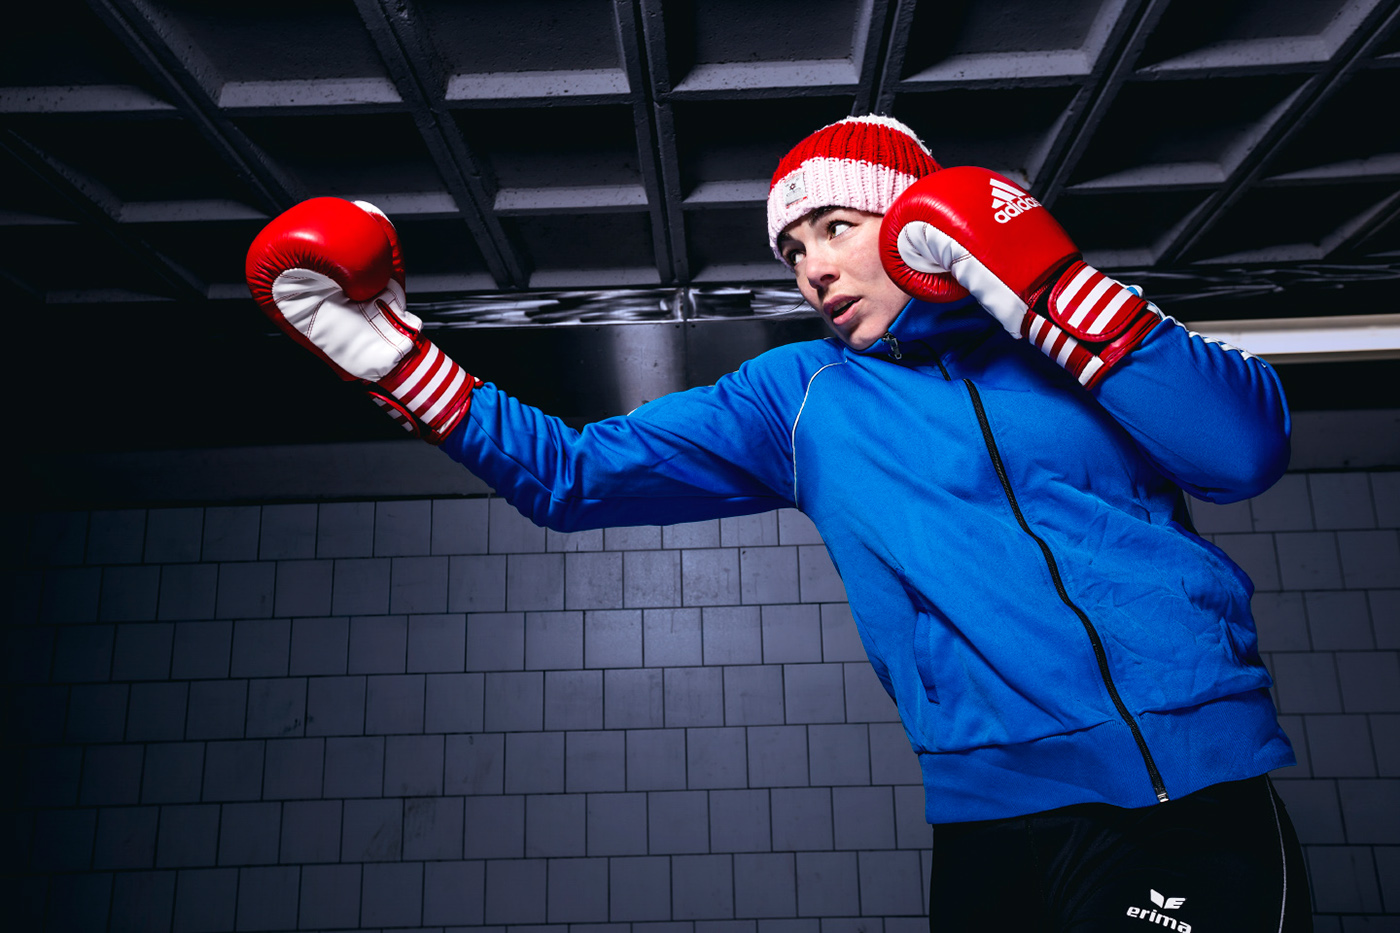 Boxing Nouchka Fontijn Sjors Massar sport box girl women FIT healthy punches lifestyle training Holland The Netherlands Olympics